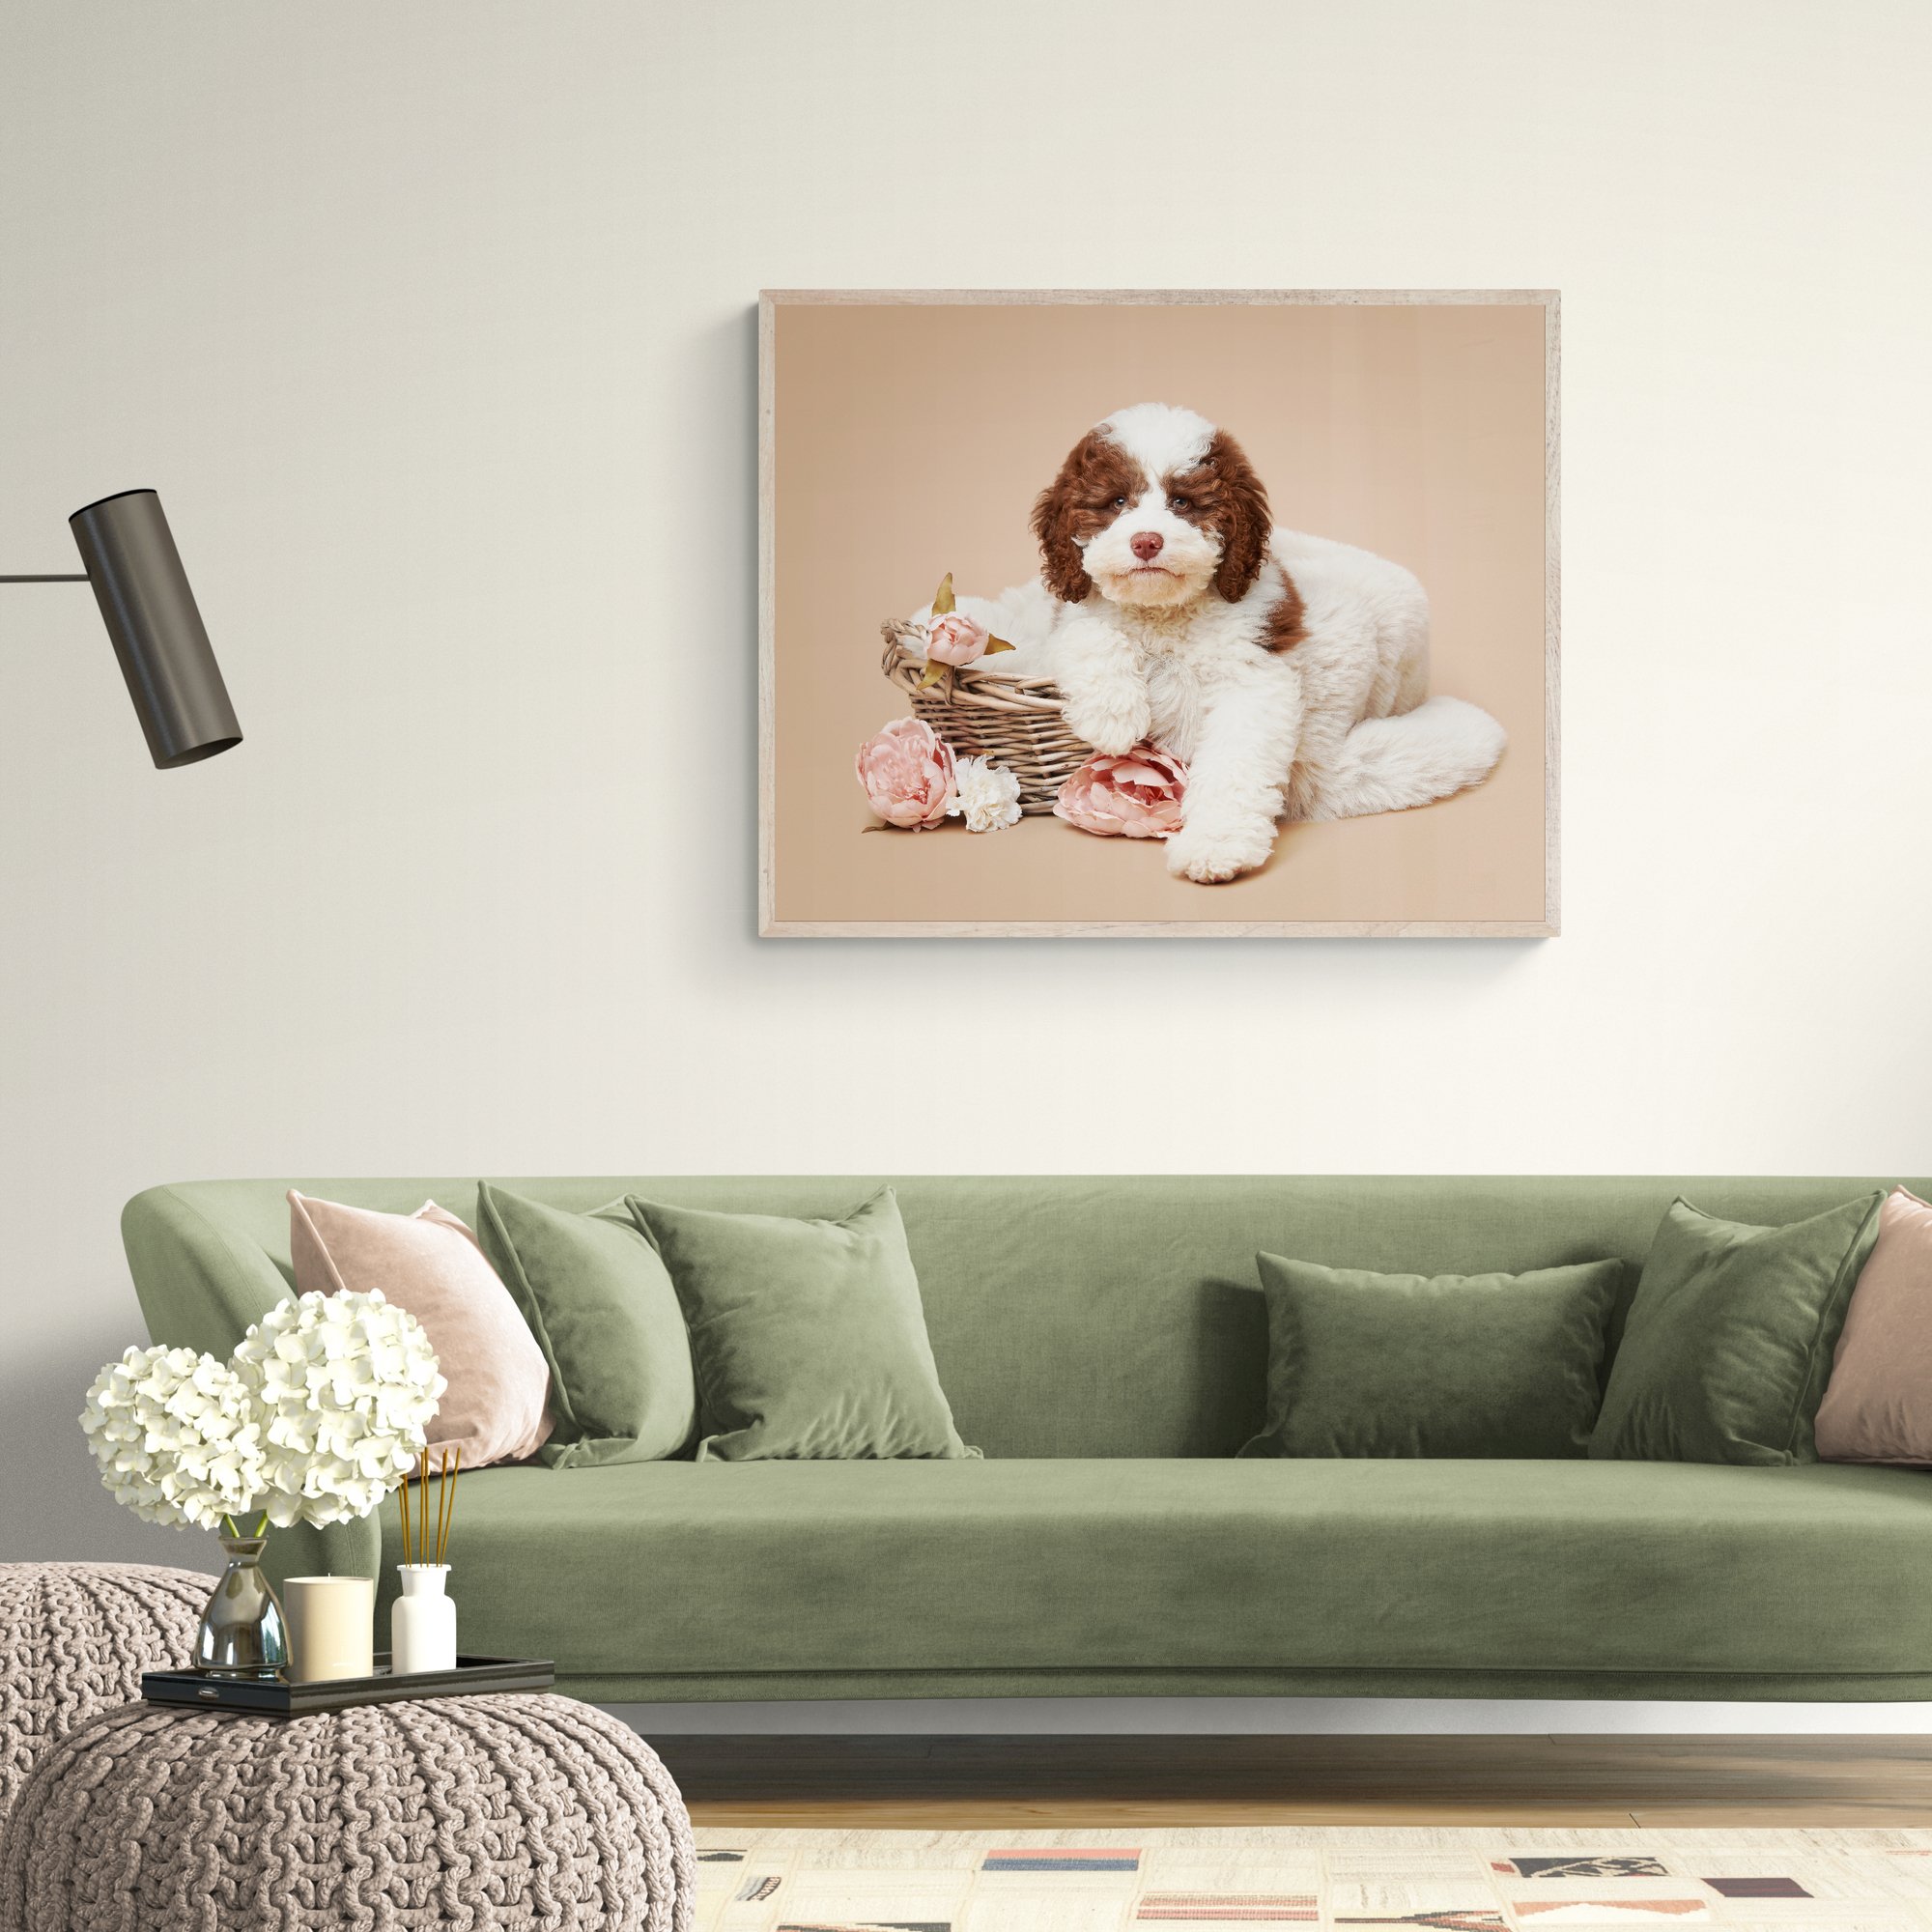 Modern_chic_living_room_interior_with_long_sofa-5.jpg